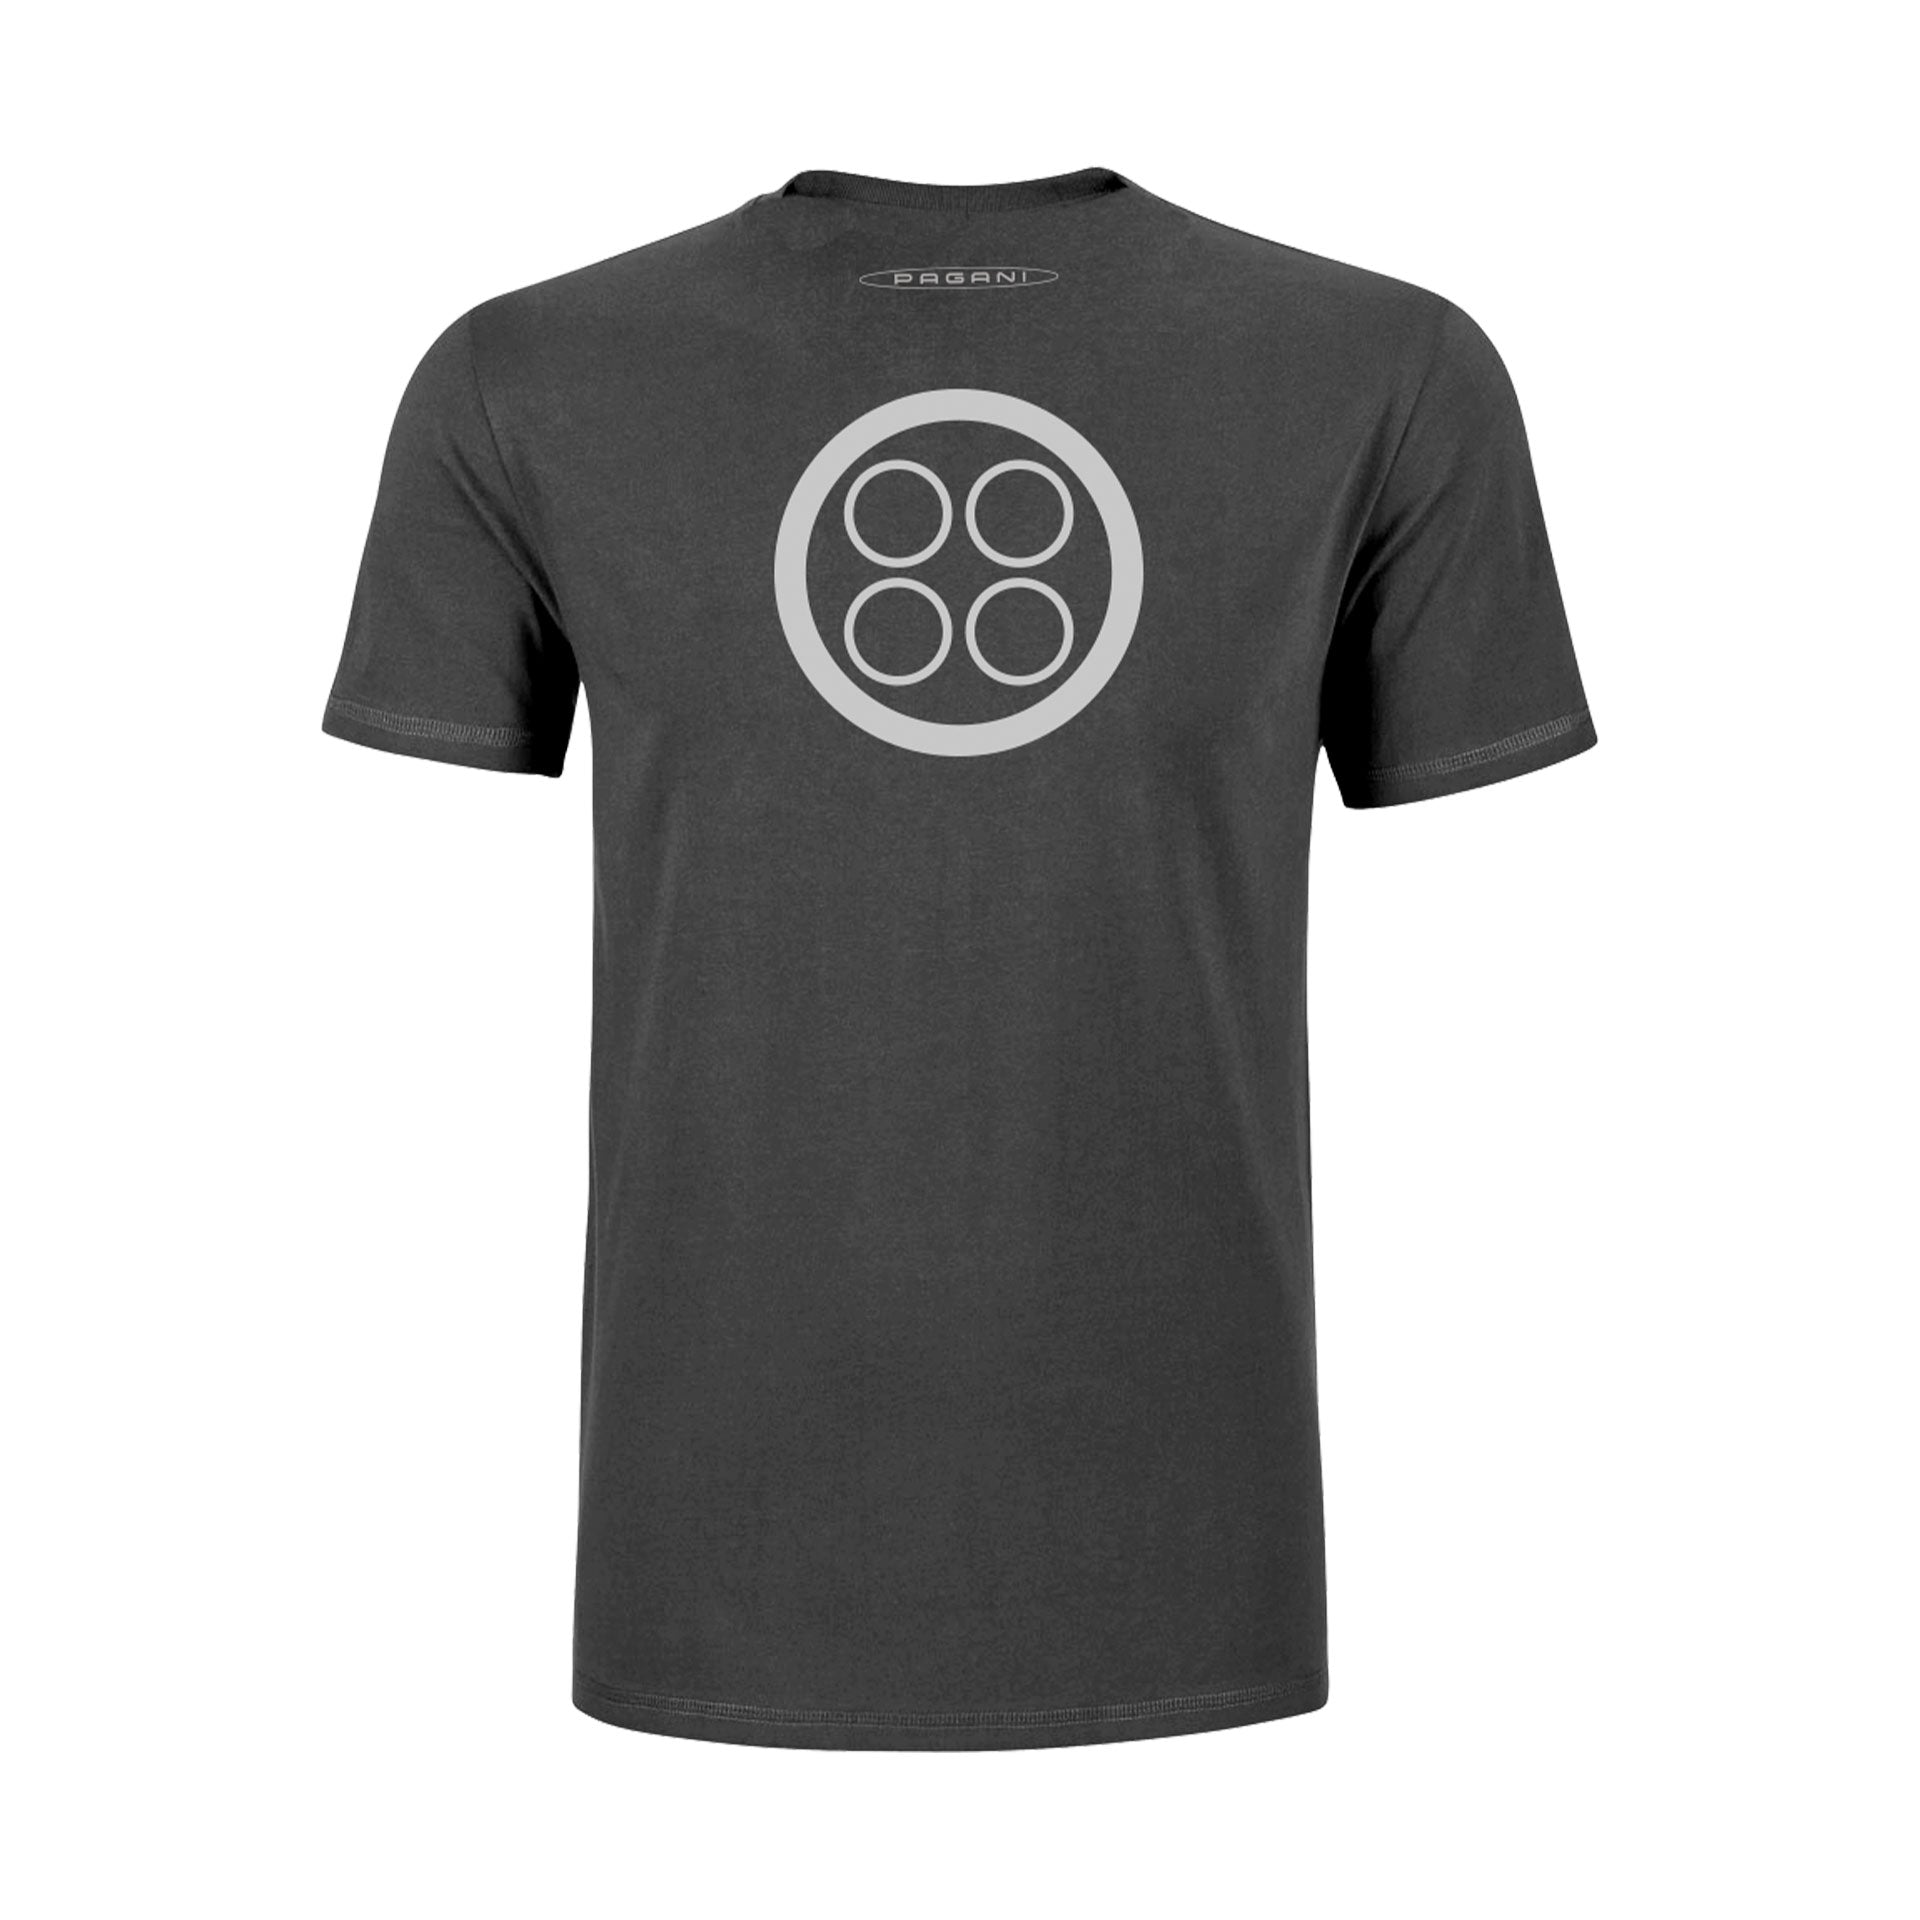 Herren-T-Shirt, anthrazit | Pagani Team Collection